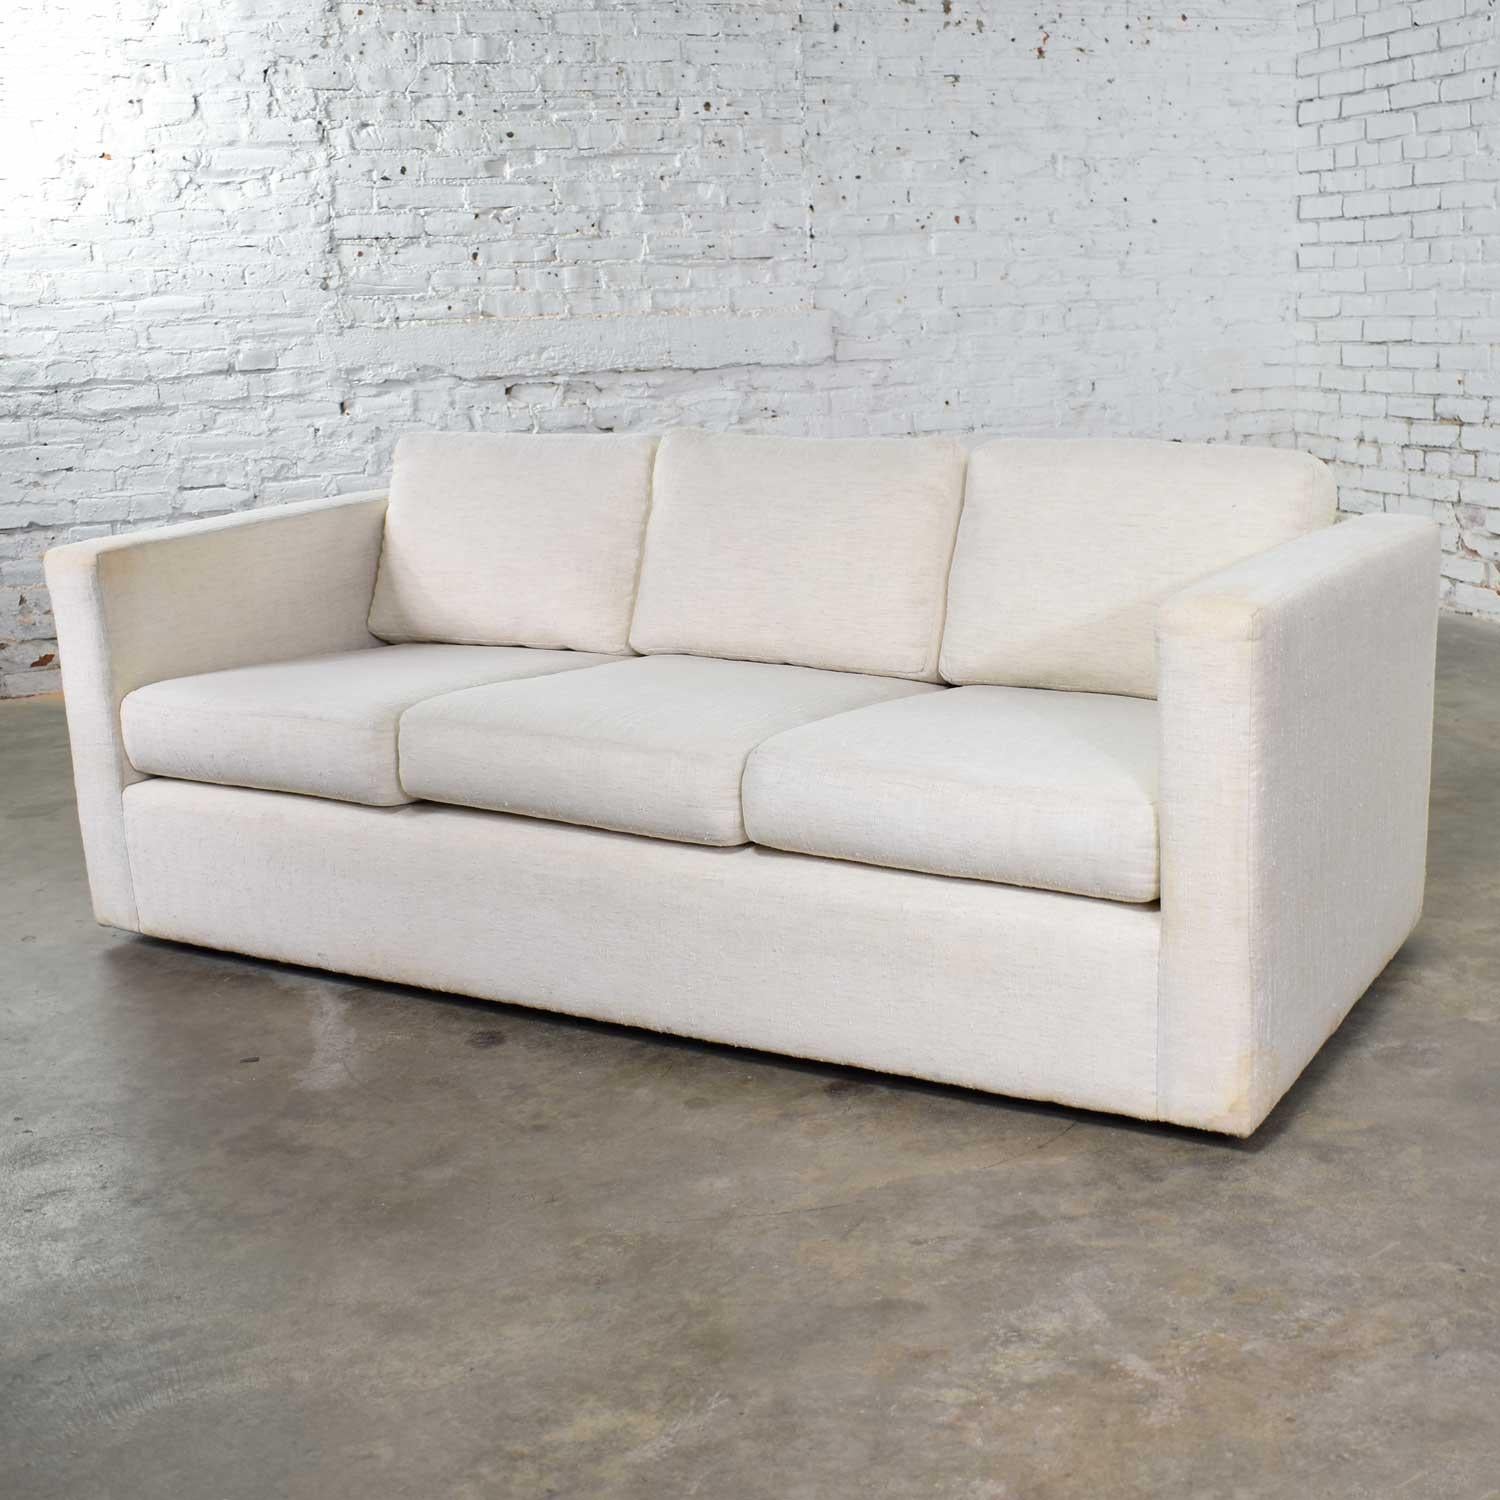 American White Modern Tuxedo Style Sofa by Milo Baughman for Thayer Coggin